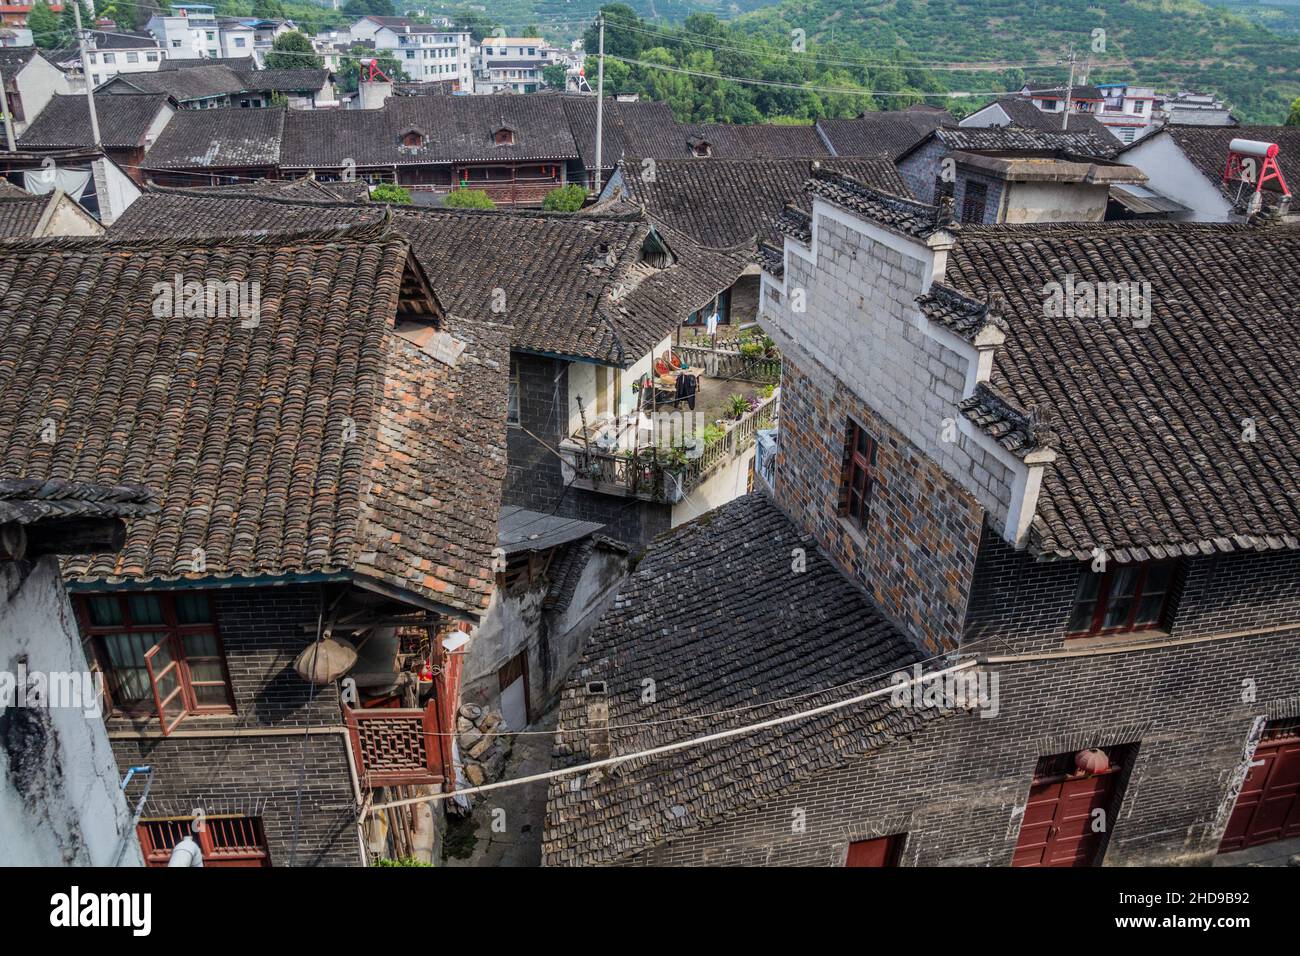 Roofs of Furong Zhen town, Hunan province, China Stock Photo